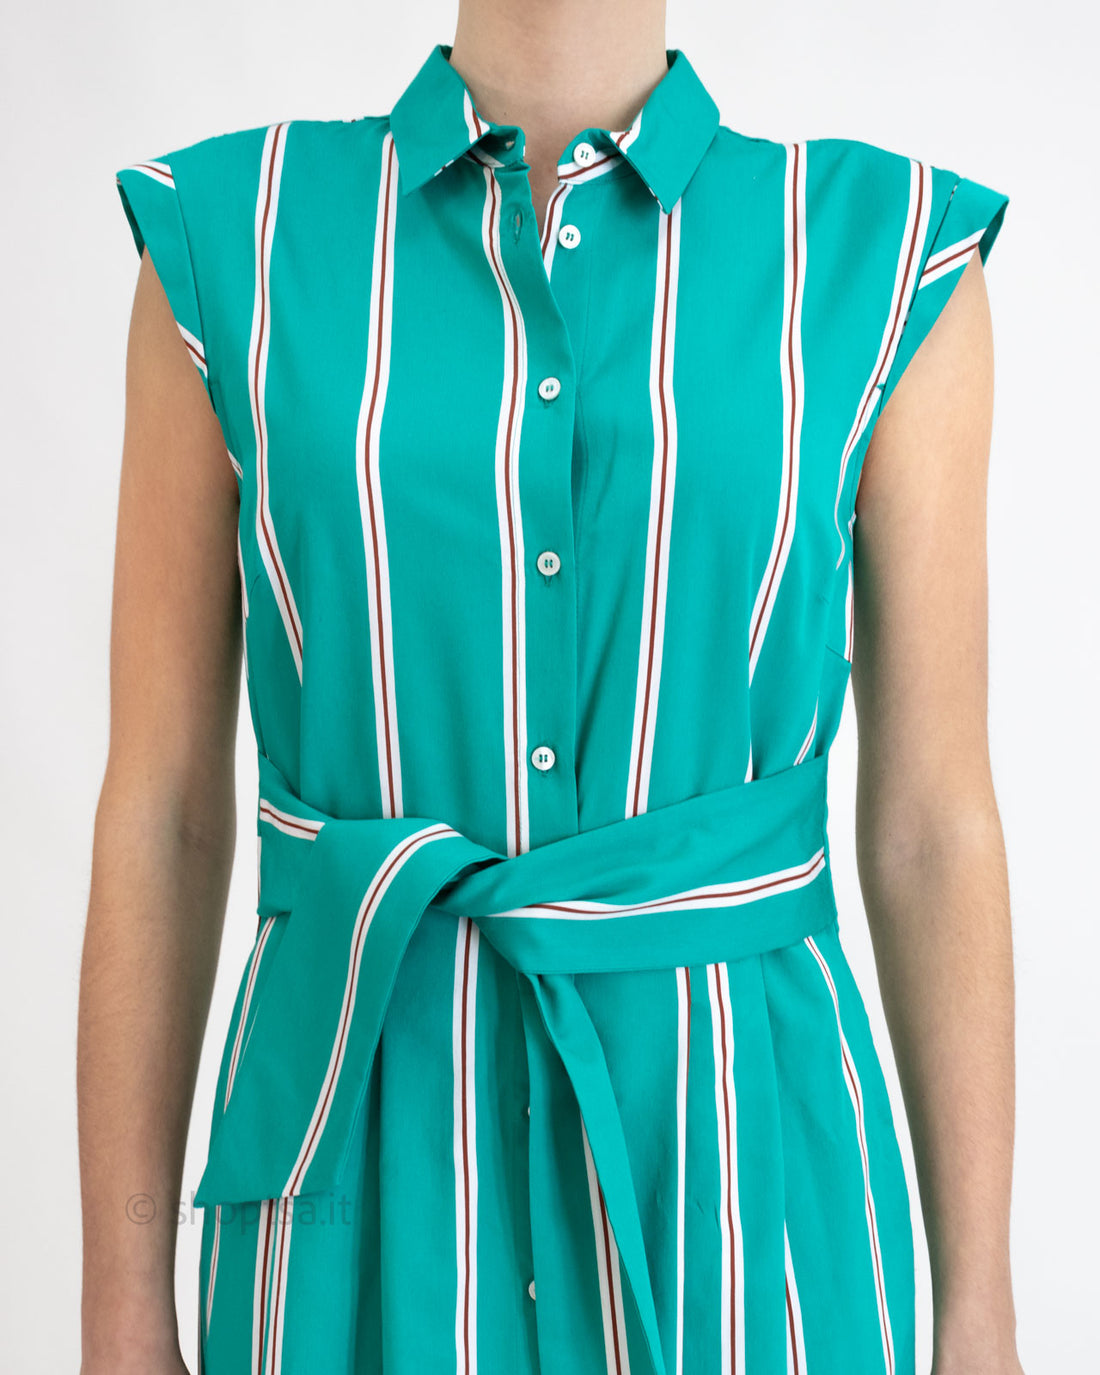 Turquoise striped shirt dress